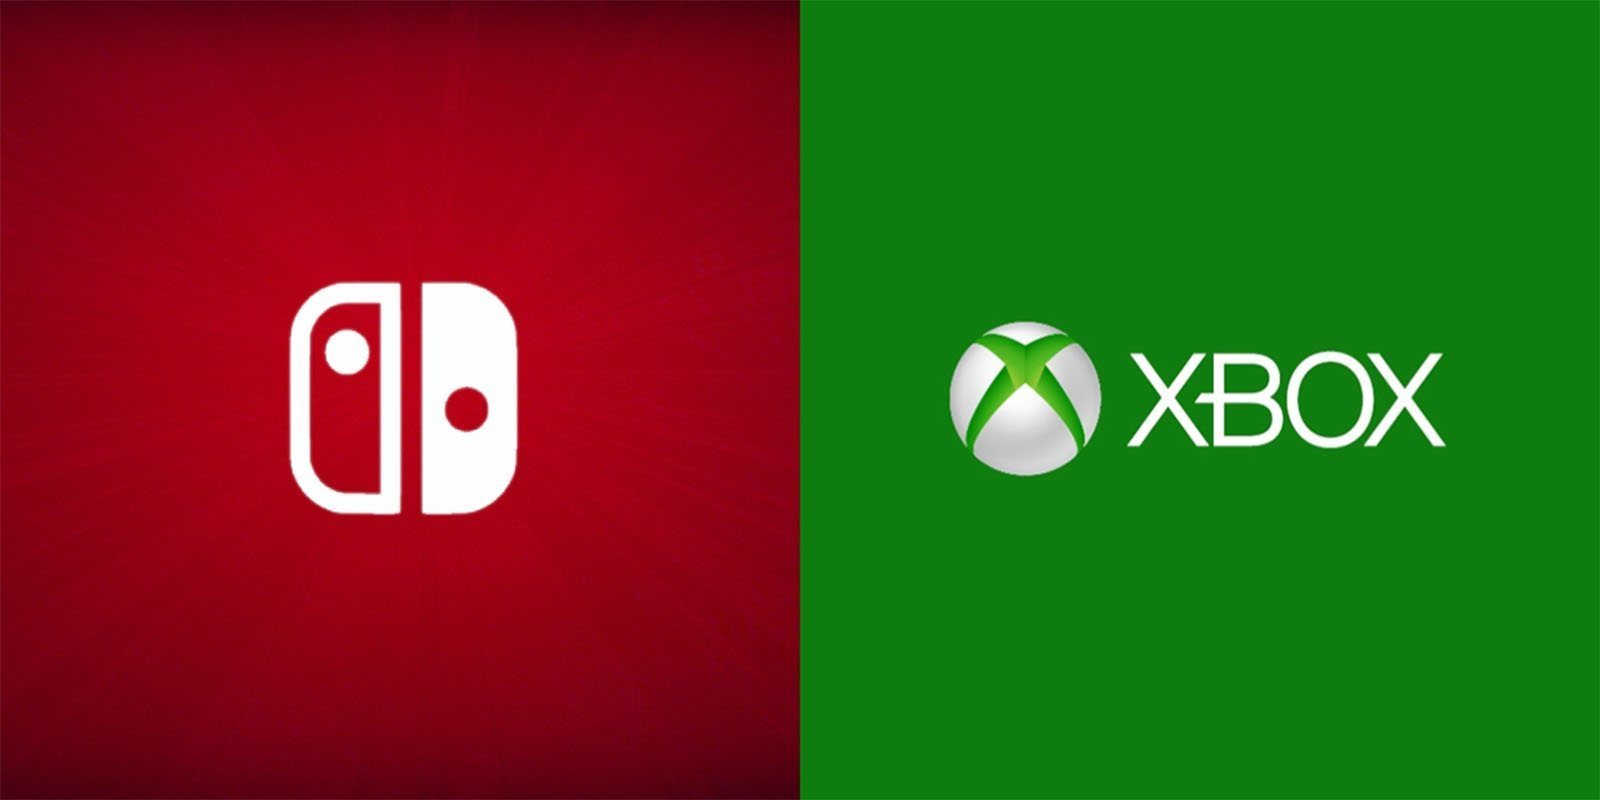 Nintendo Switch superará a Xbox One en número de consolas en 2018, según analistas